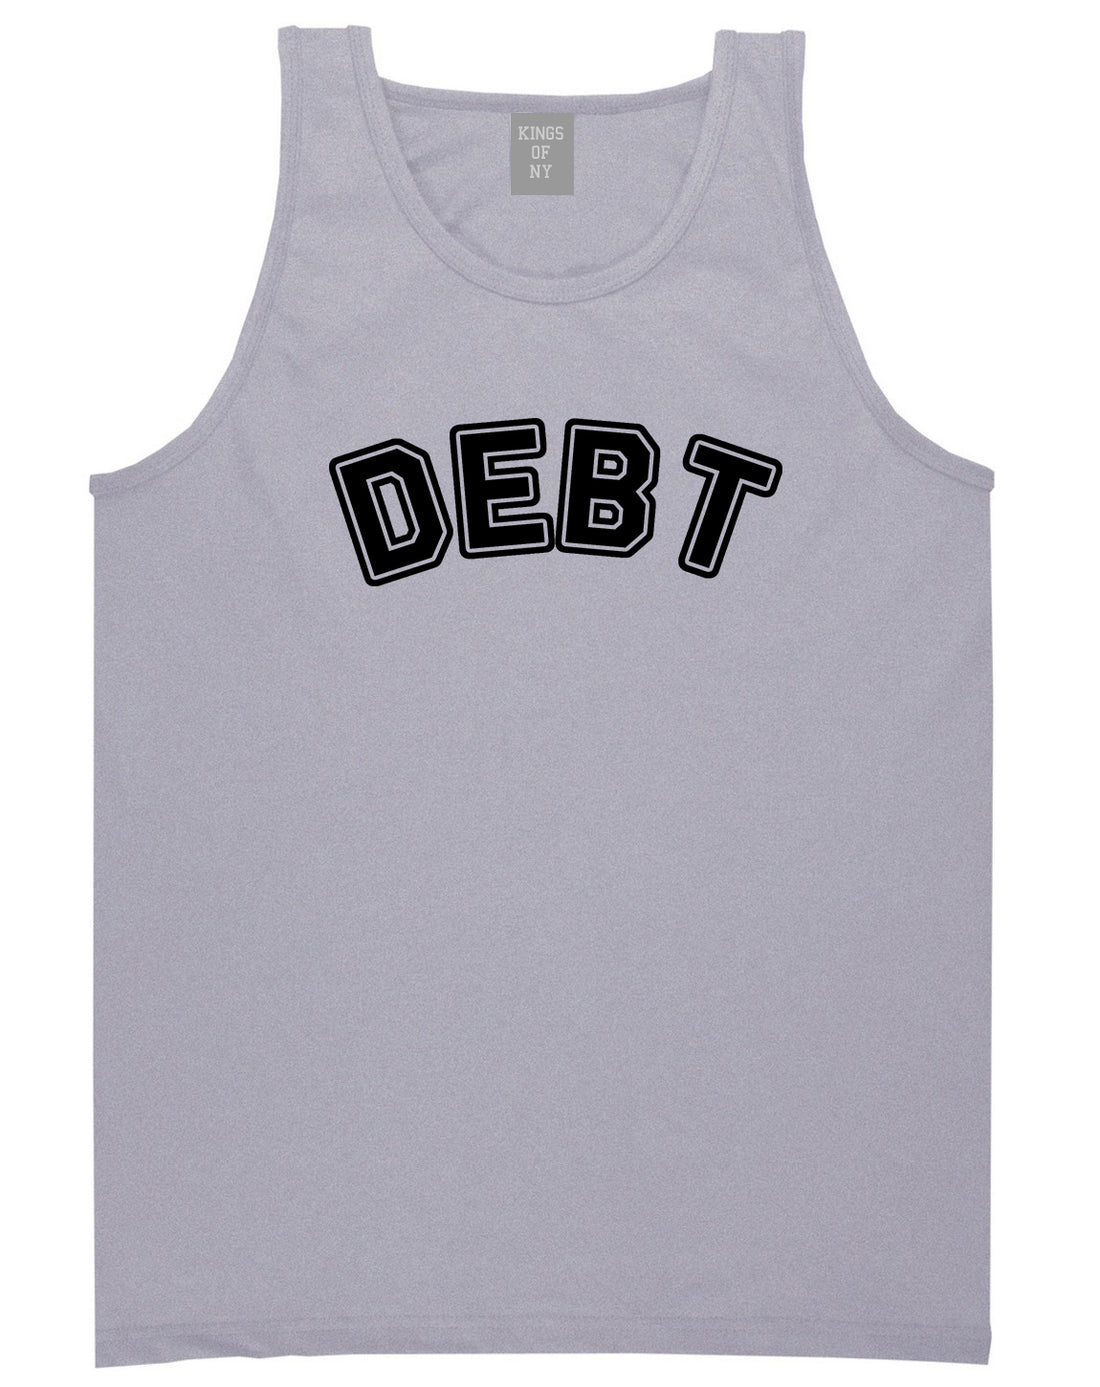 Debt Life T-Shirt in Grey